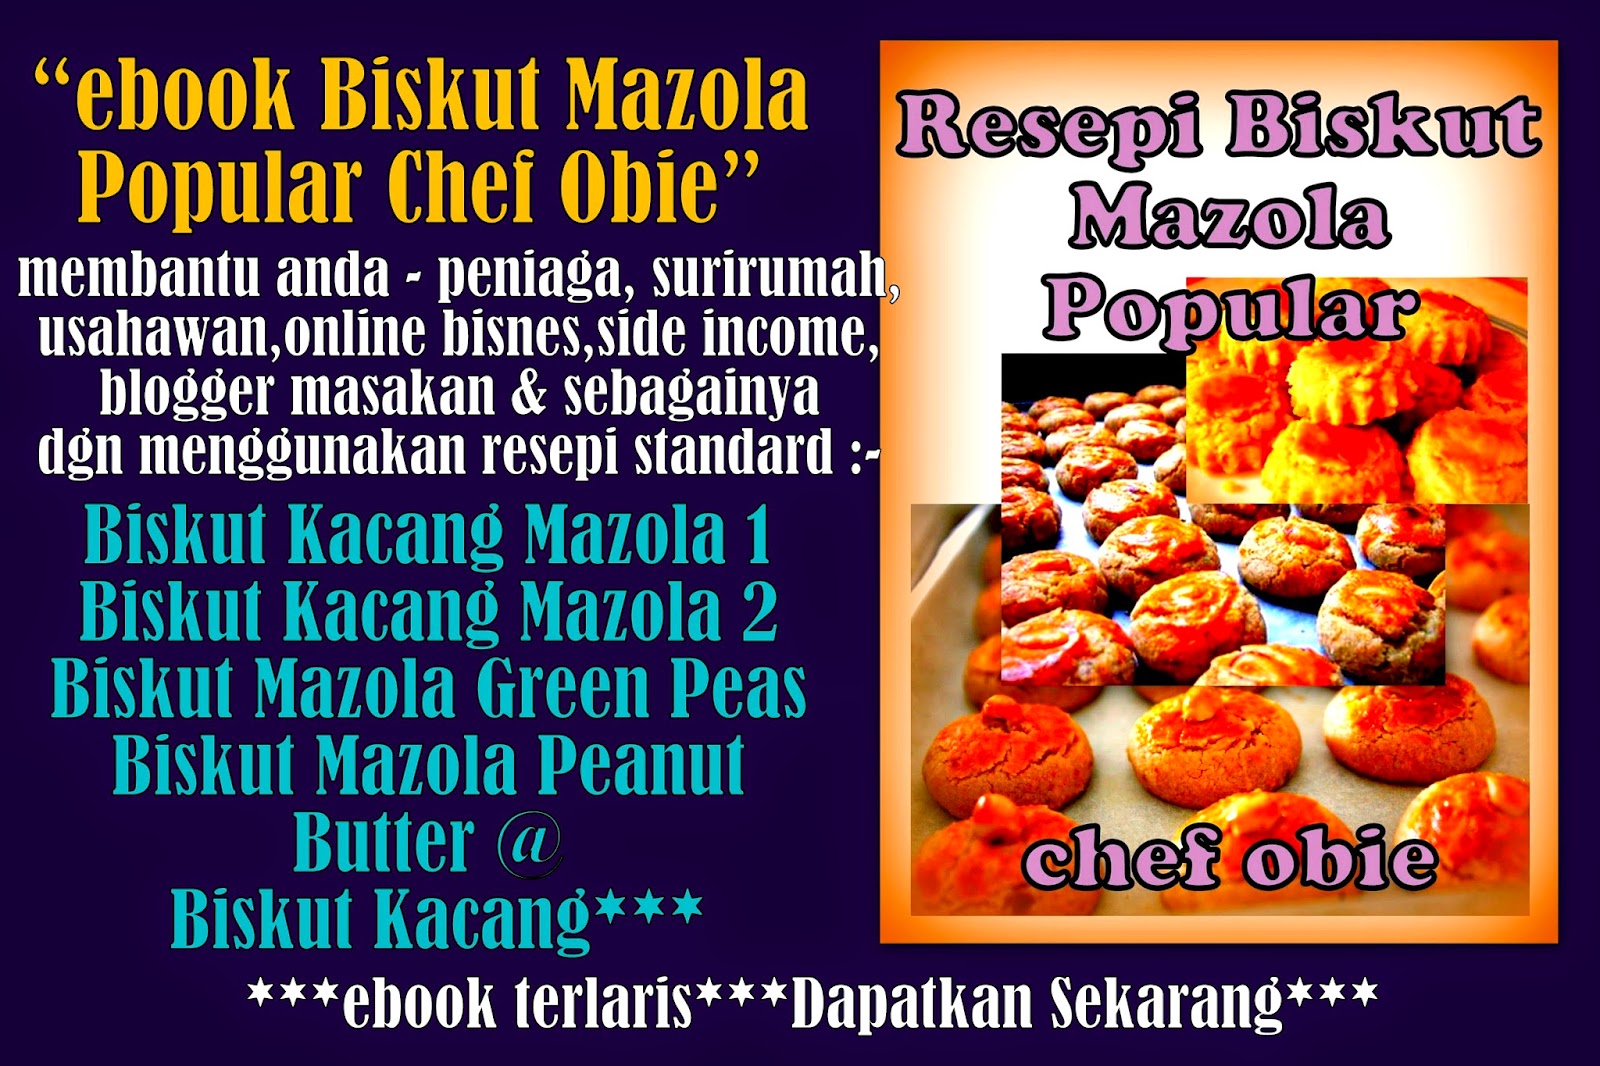 Chef Obie Kelas Masakan 1001 Info & Resepi: Dapatkan ebook 